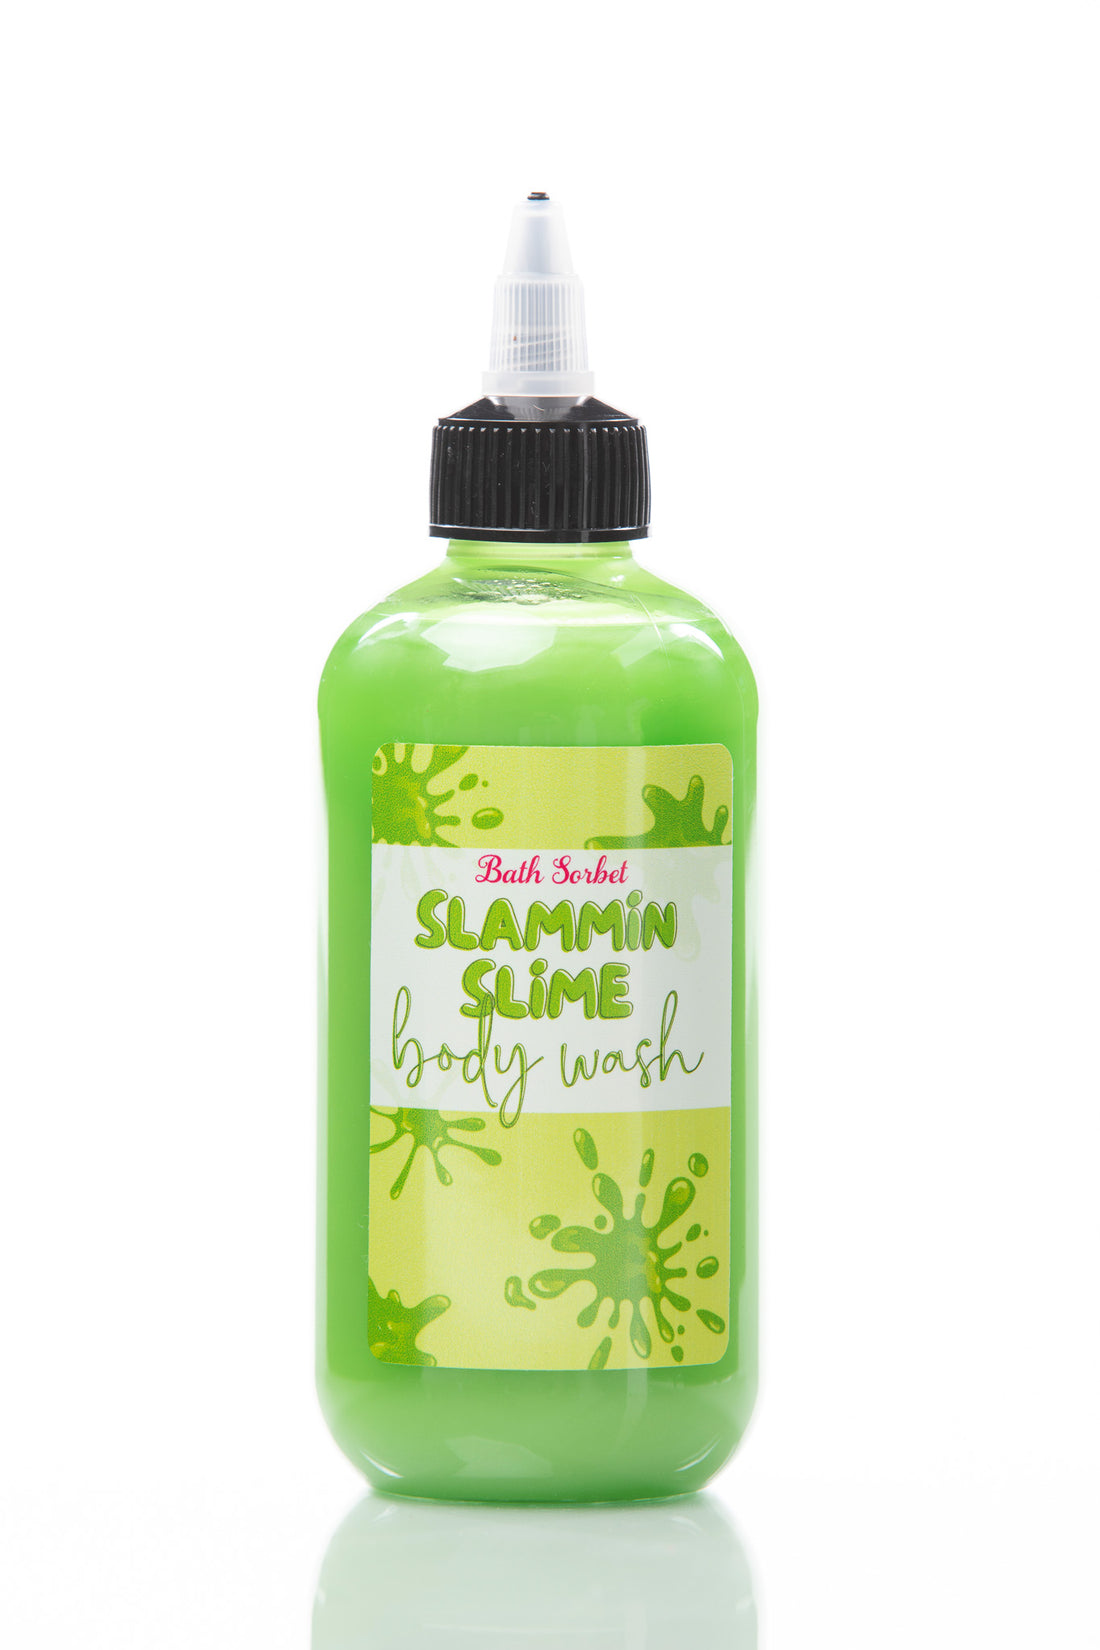 Slammin Slime Kids Body Wash